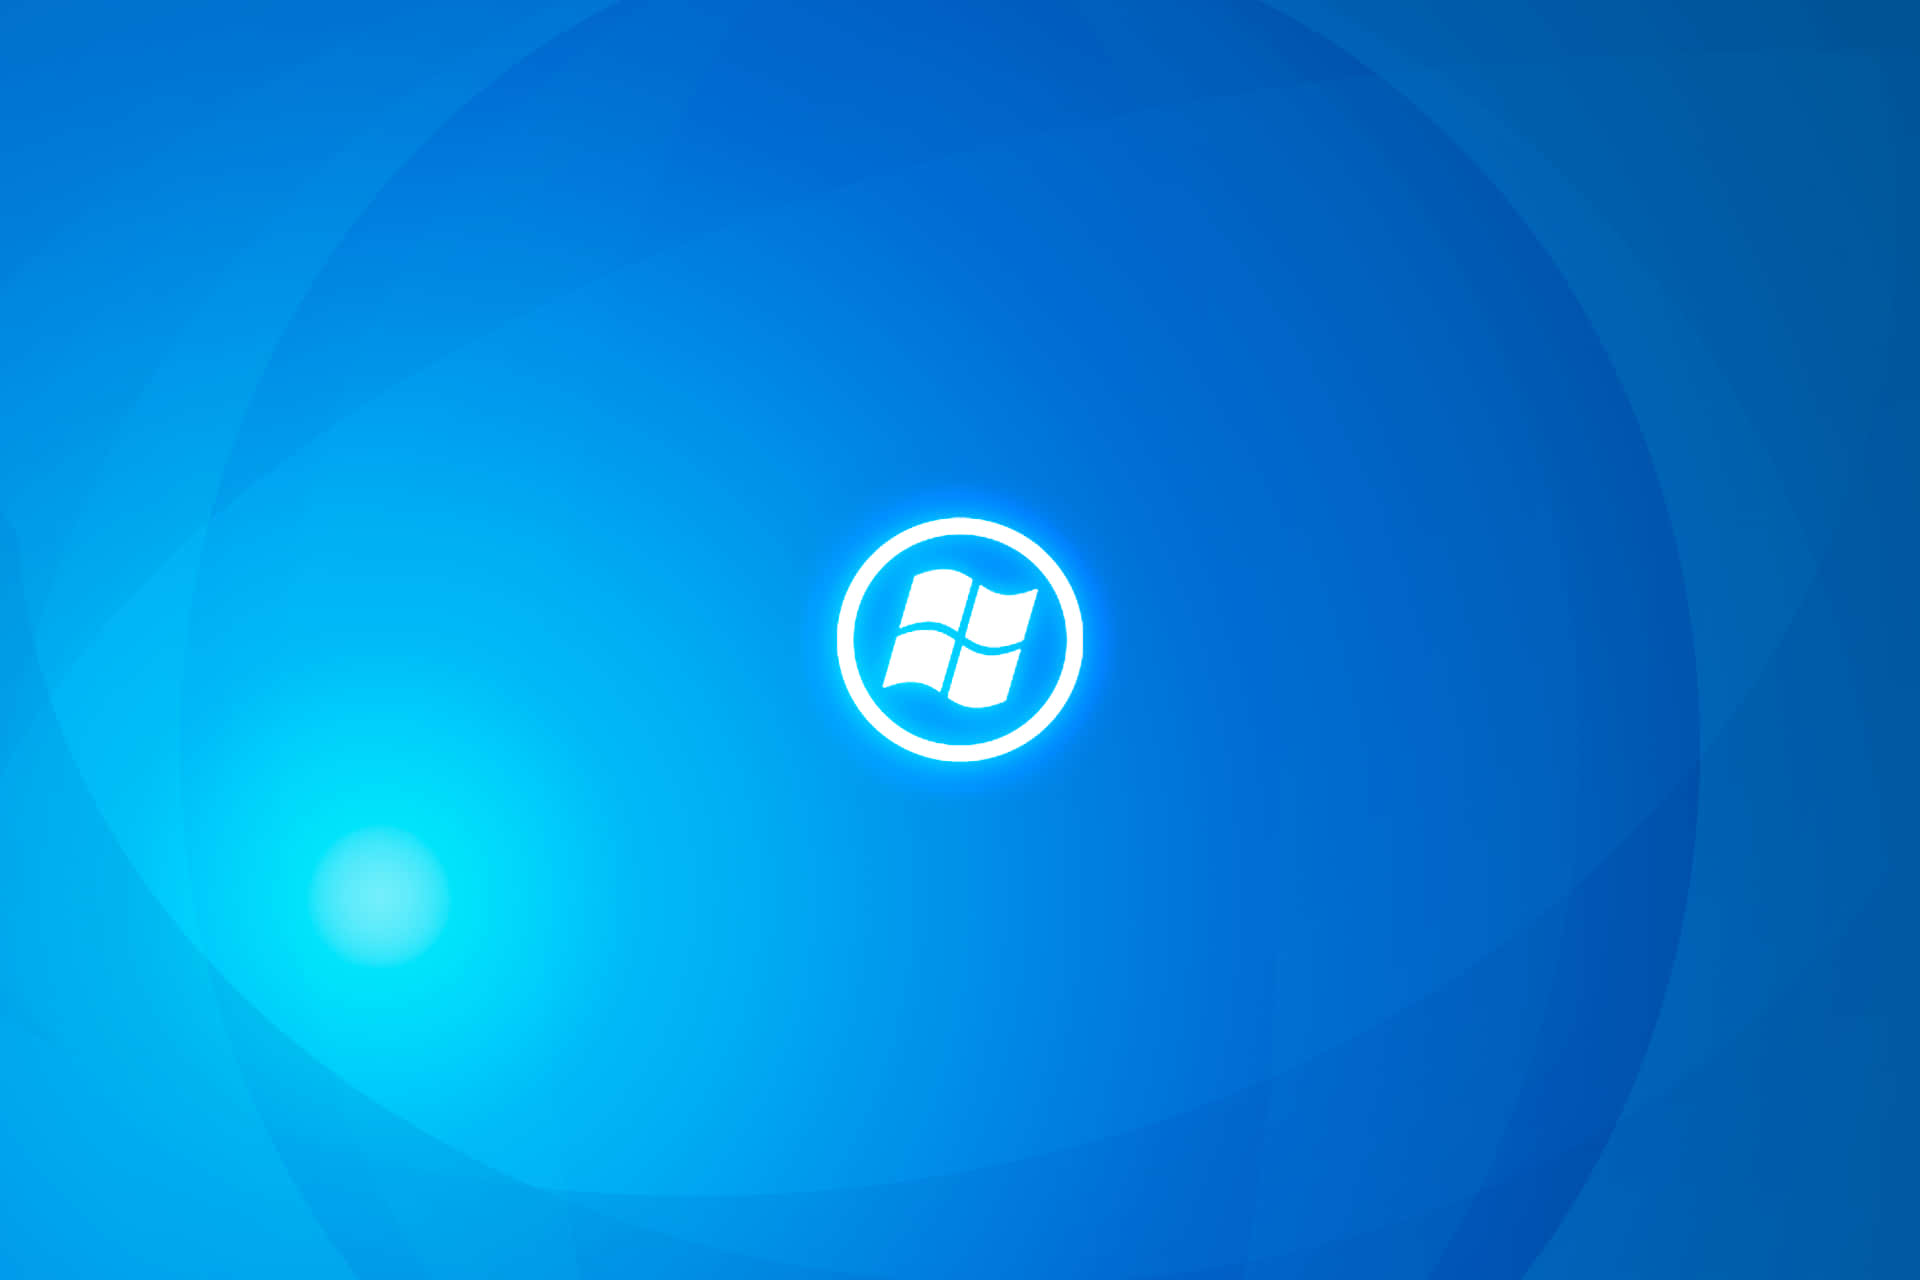 Unleash the power of Windows 10